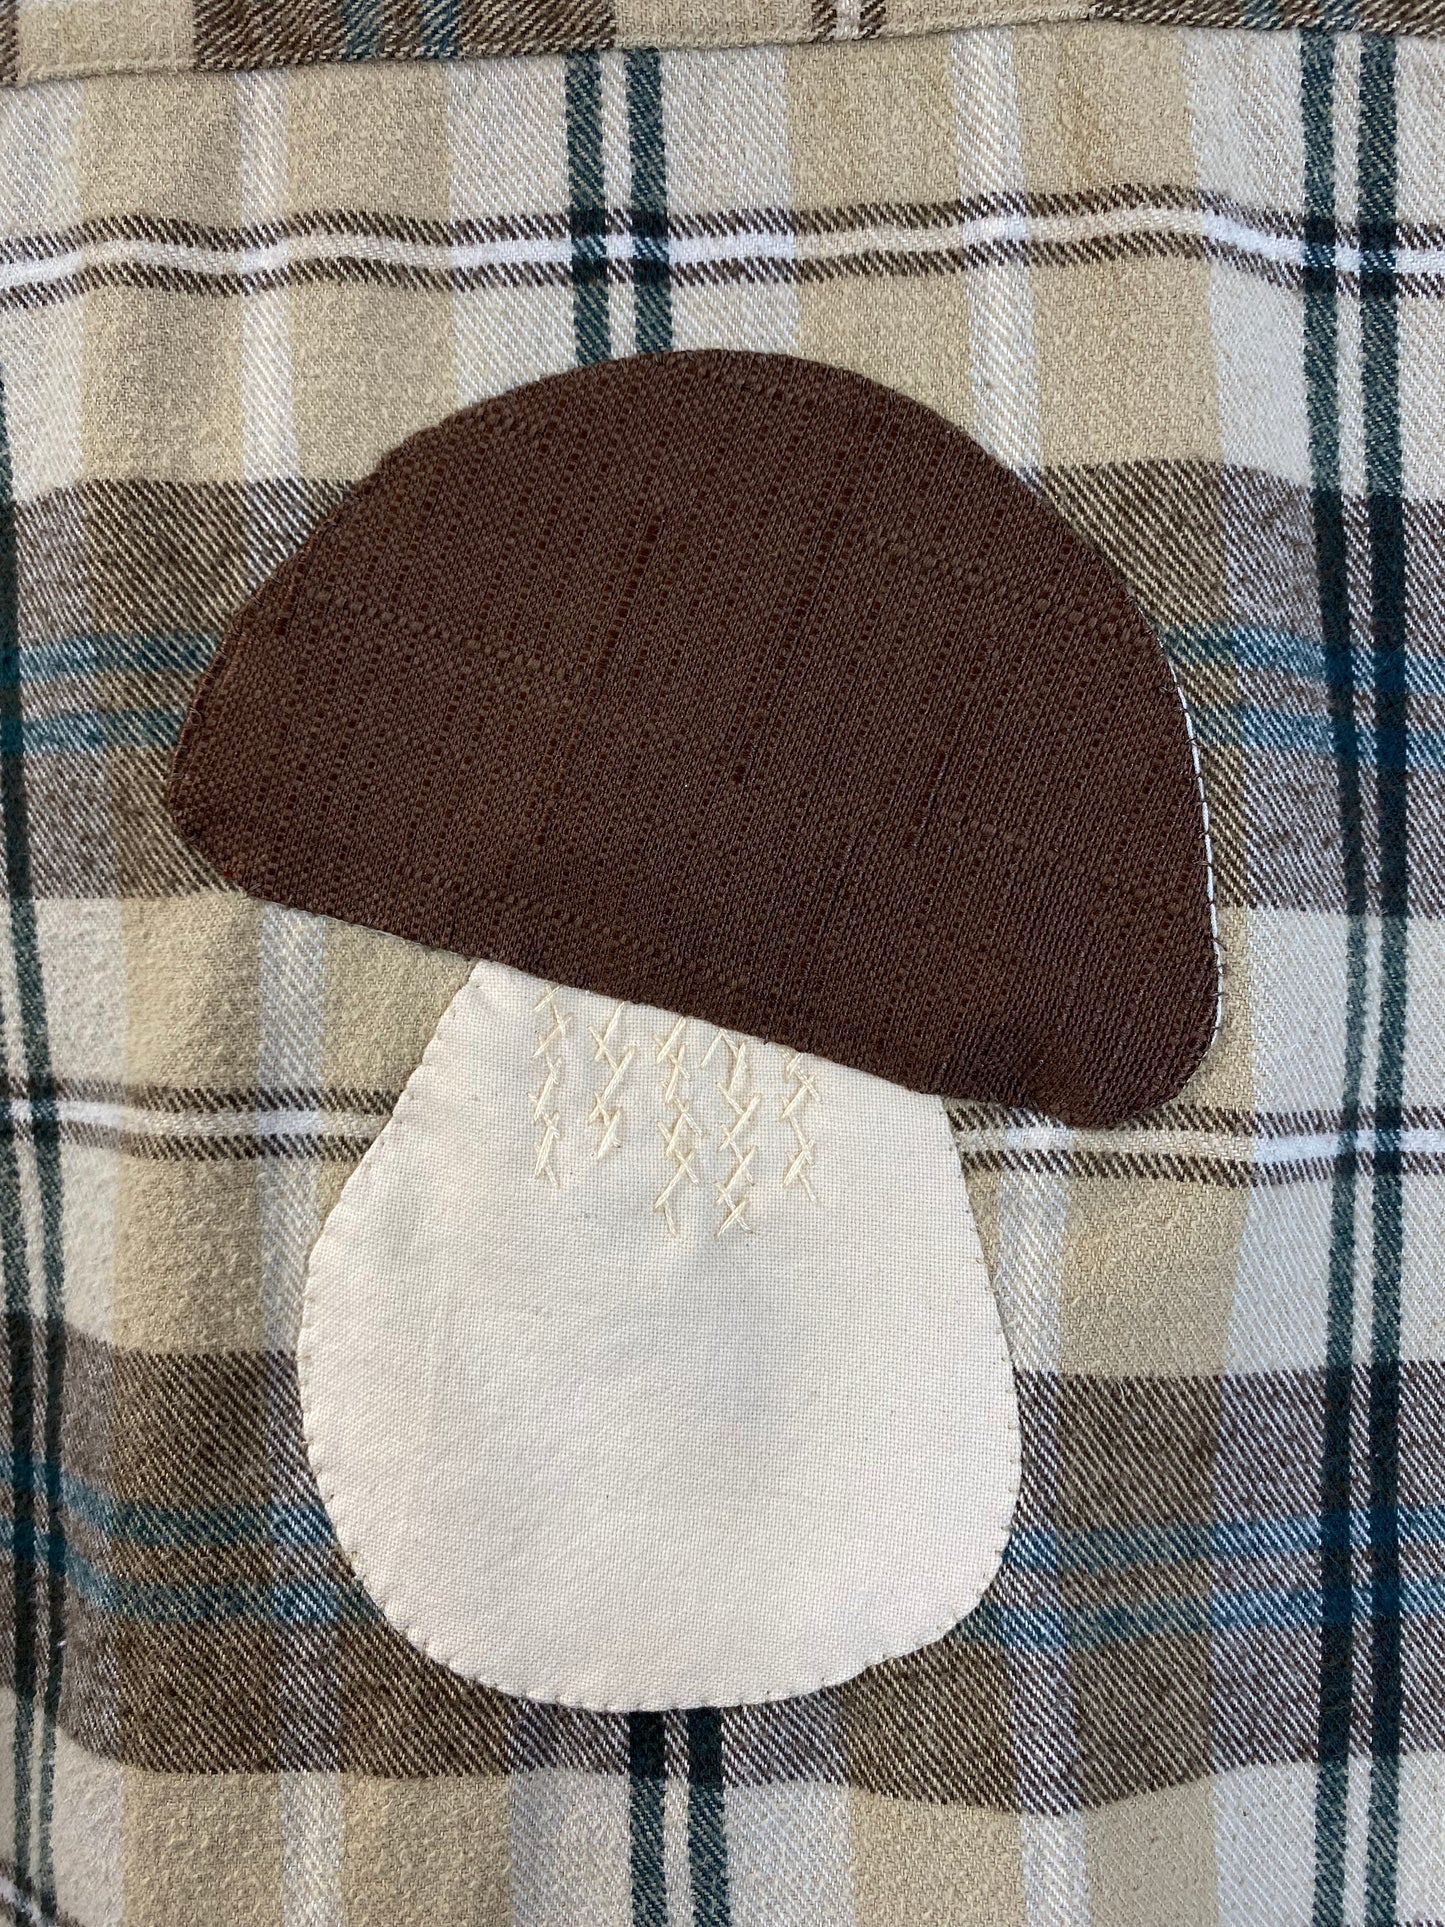 Bolete Flannel, L, tan and light brown plaid